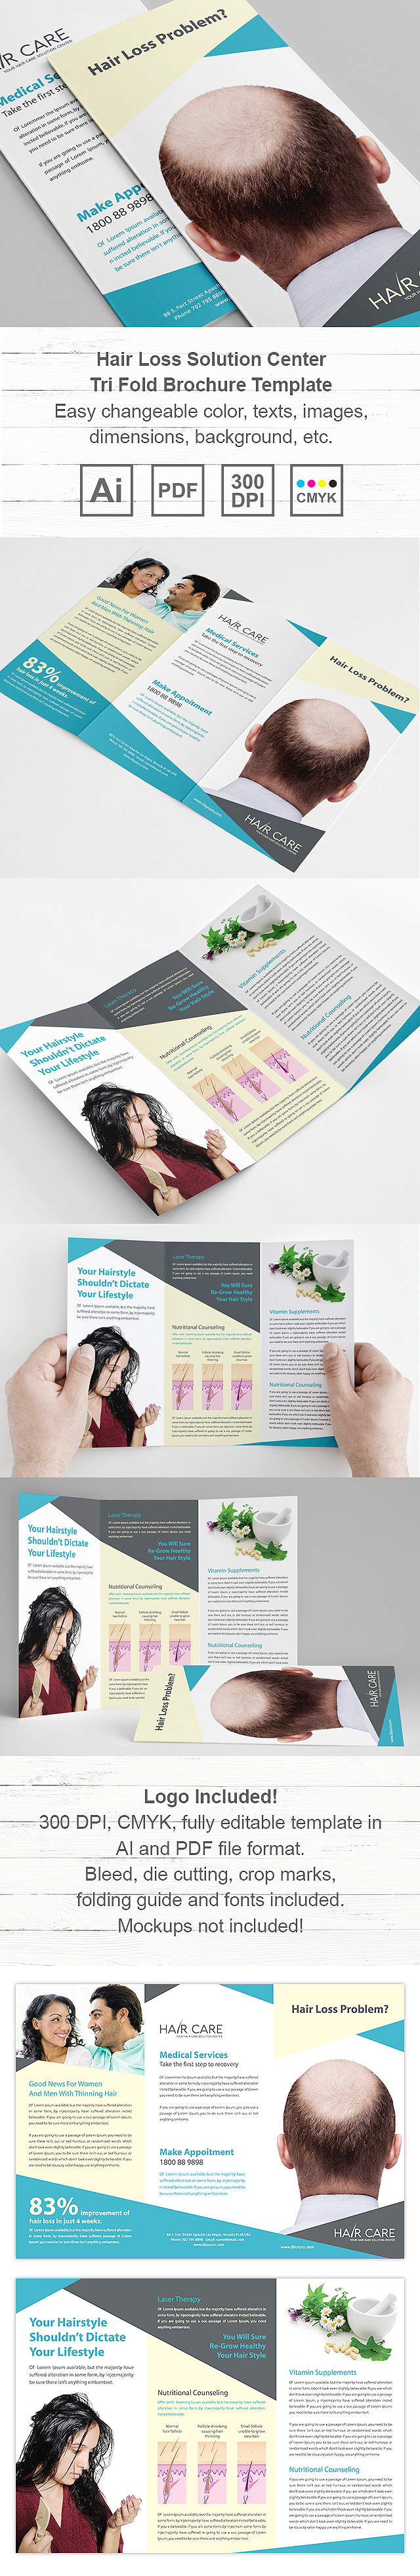 Hair Loss Center Tri Fold Brochure Template